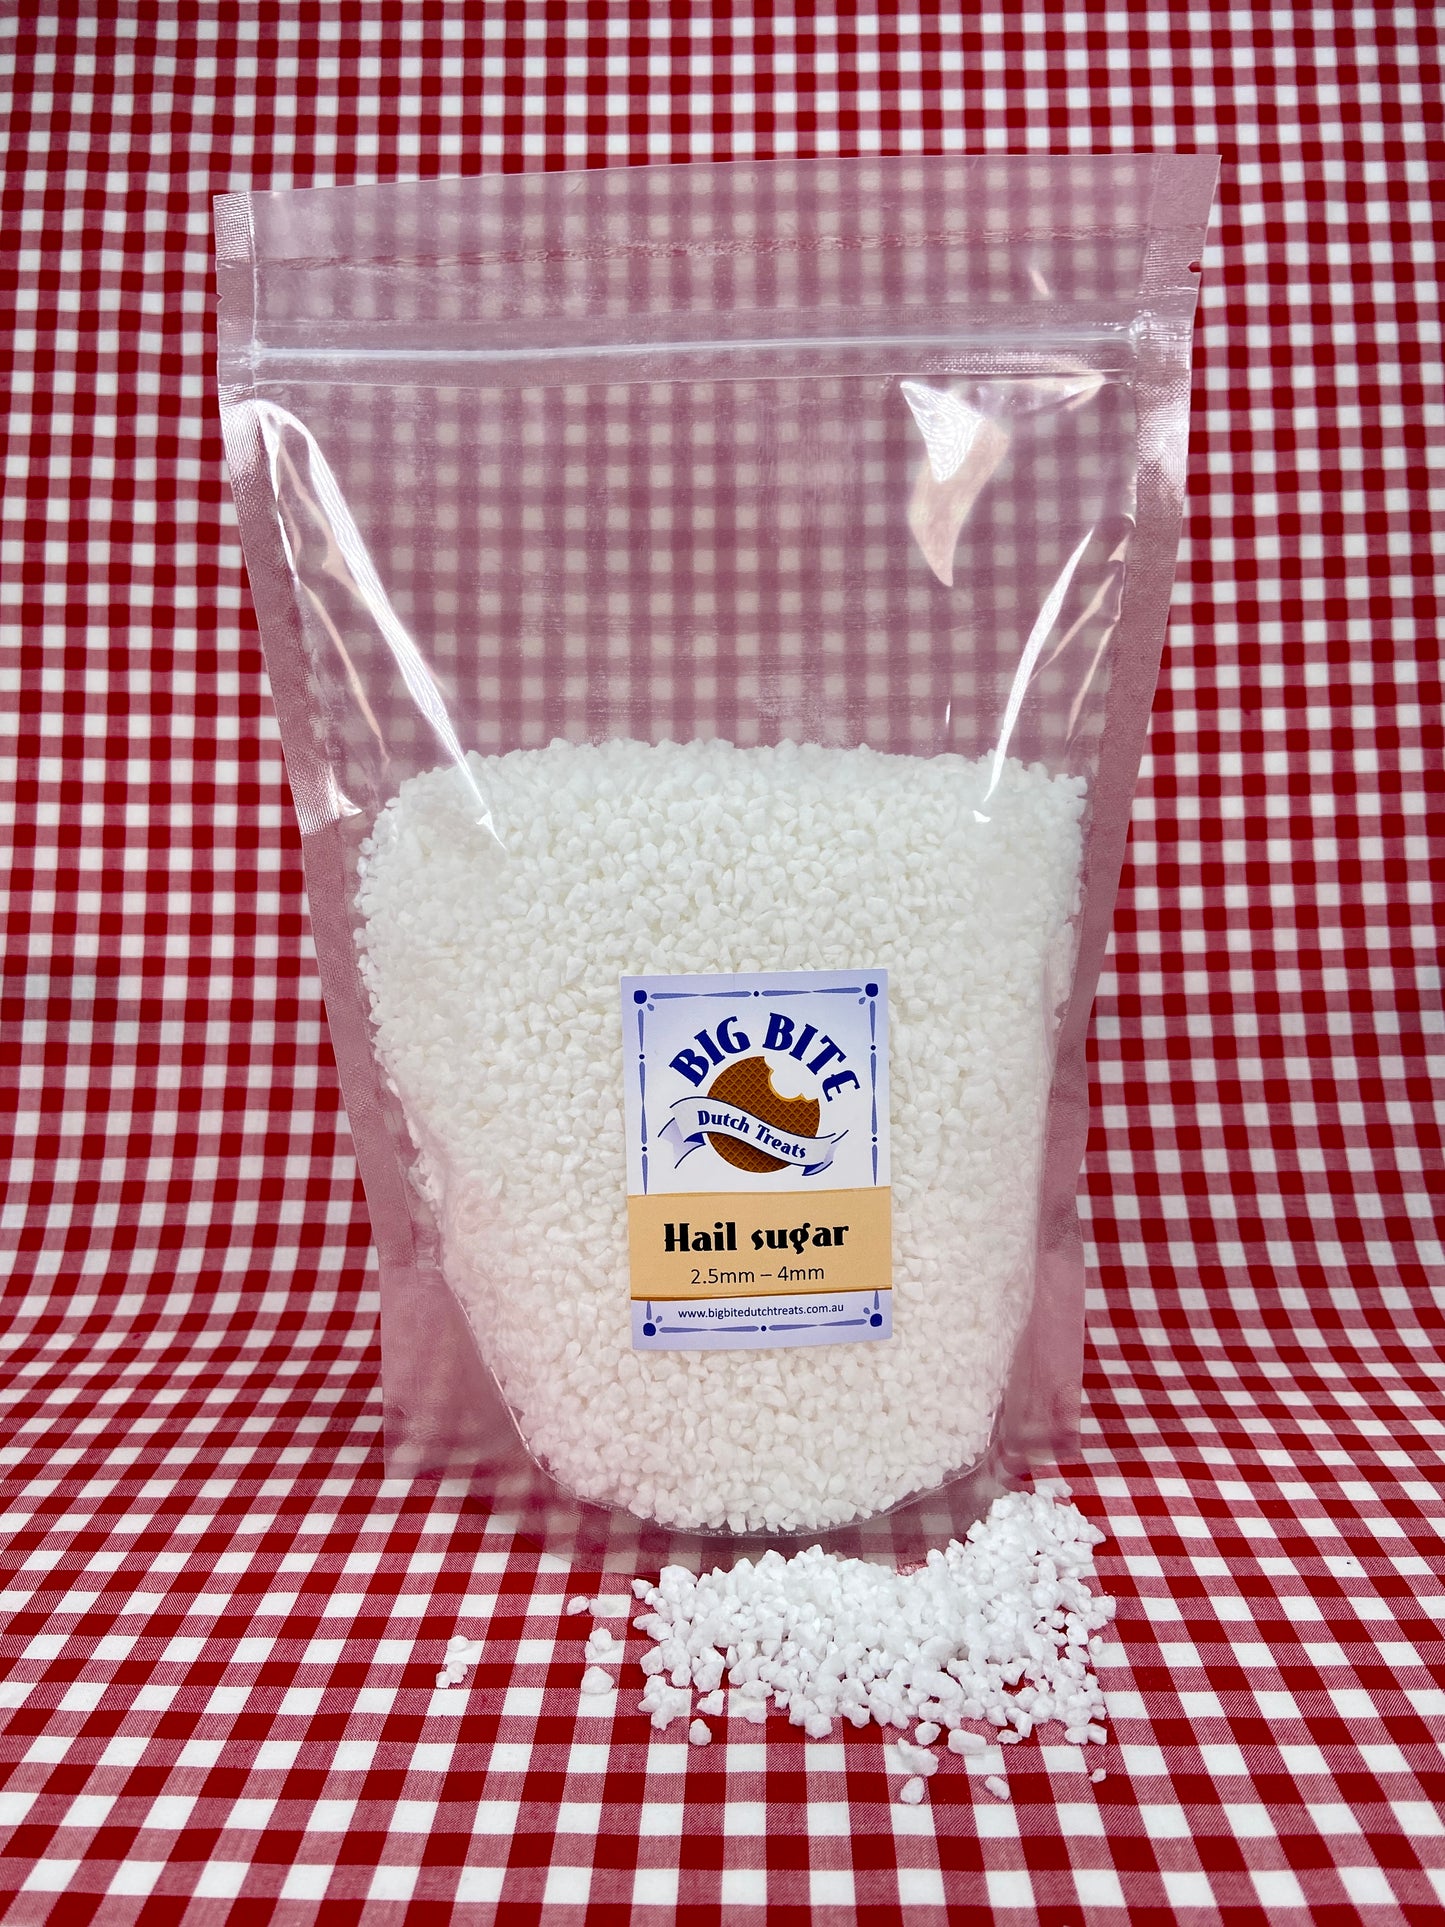 hail sugar - nib sugar - pearl sugar - parel grein suiker - 750g- Big Bite Dutch Treats